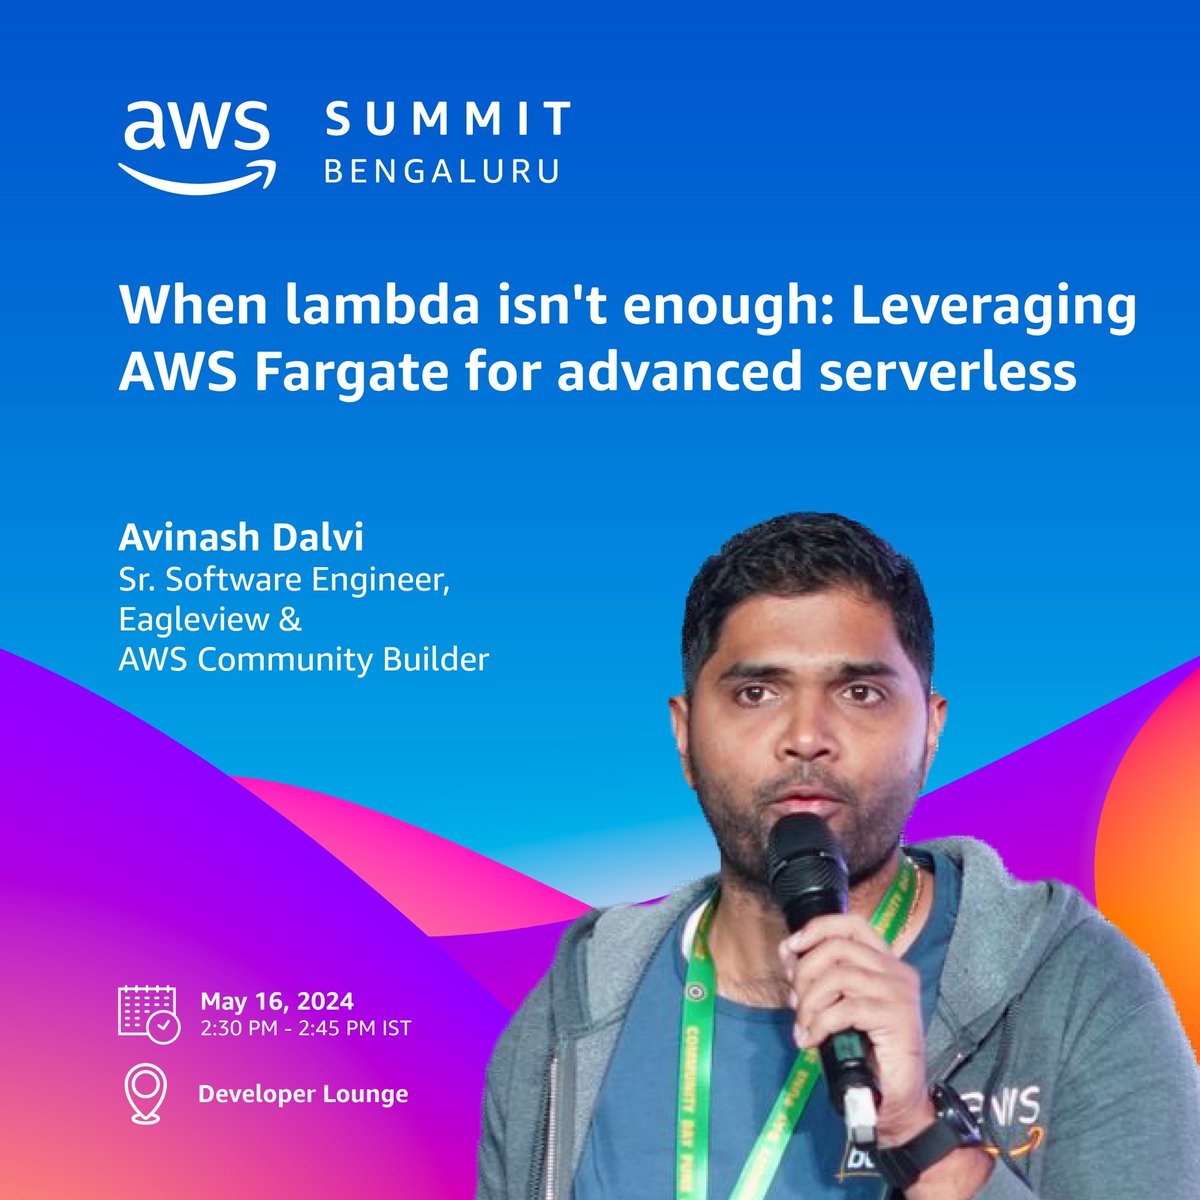 I'll be speaking at the AWS Summit Bengaluru 2024 in the Developer Lounge! My talk is titled '𝐖𝐡𝐞𝐧 𝐋𝐚𝐦𝐛𝐝𝐚 𝐈𝐬𝐧'𝐭 𝐄𝐧𝐨𝐮𝐠𝐡: 𝐋𝐞𝐯𝐞𝐫𝐚𝐠𝐢𝐧𝐠 𝐀𝐖𝐒 𝐅𝐚𝐫𝐠𝐚𝐭𝐞 𝐟𝐨𝐫 𝐀𝐝𝐯𝐚𝐧𝐜𝐞𝐝 𝐒𝐞𝐫𝐯𝐞𝐫𝐥𝐞𝐬𝐬'. #AWSSummitBengaluru #Fargate #Serverless